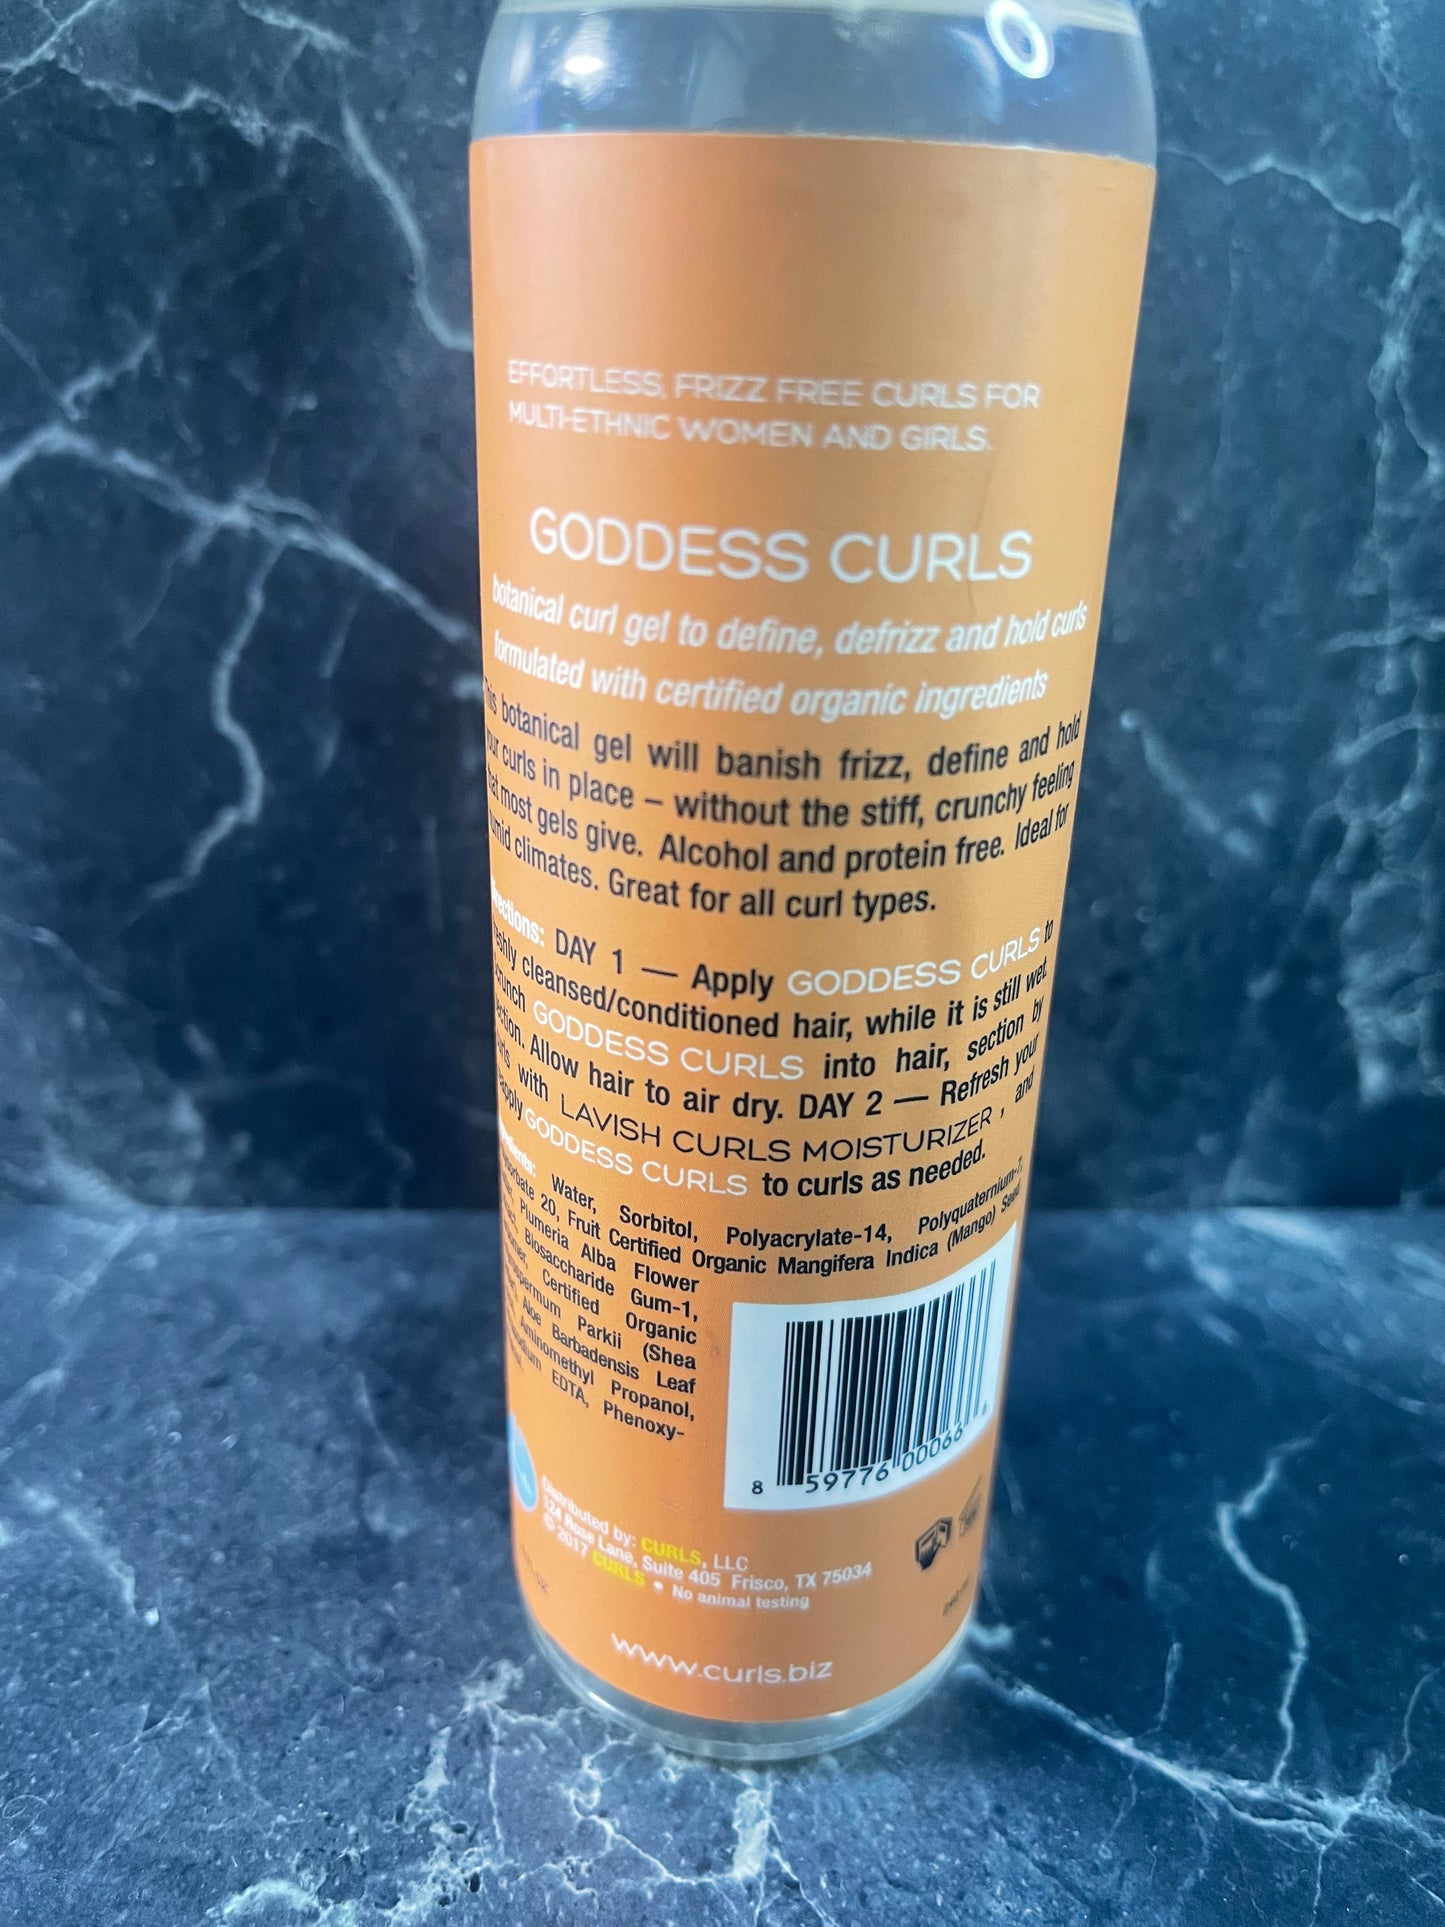 Curls Goddess Curls Botanical Gel Anti-Frizz Hydrating Mango Shea Butter 8 Oz